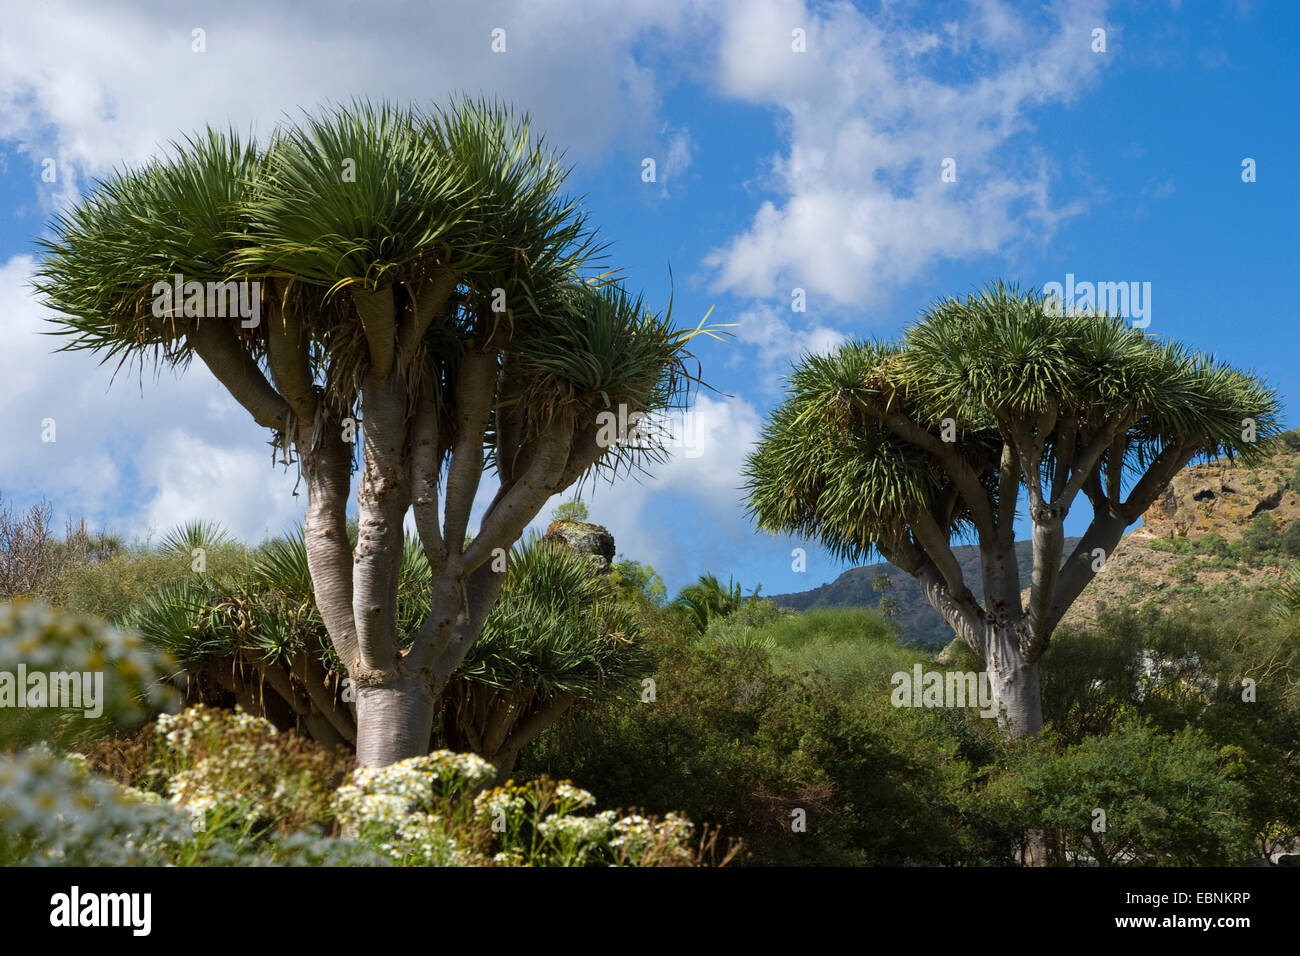 Tear Dragon's blood, Draegon Tree, Canary Islands Dragon Tree, Drago  (Dracaena draco), Canary Islands, Gran Canaria Stock Photo